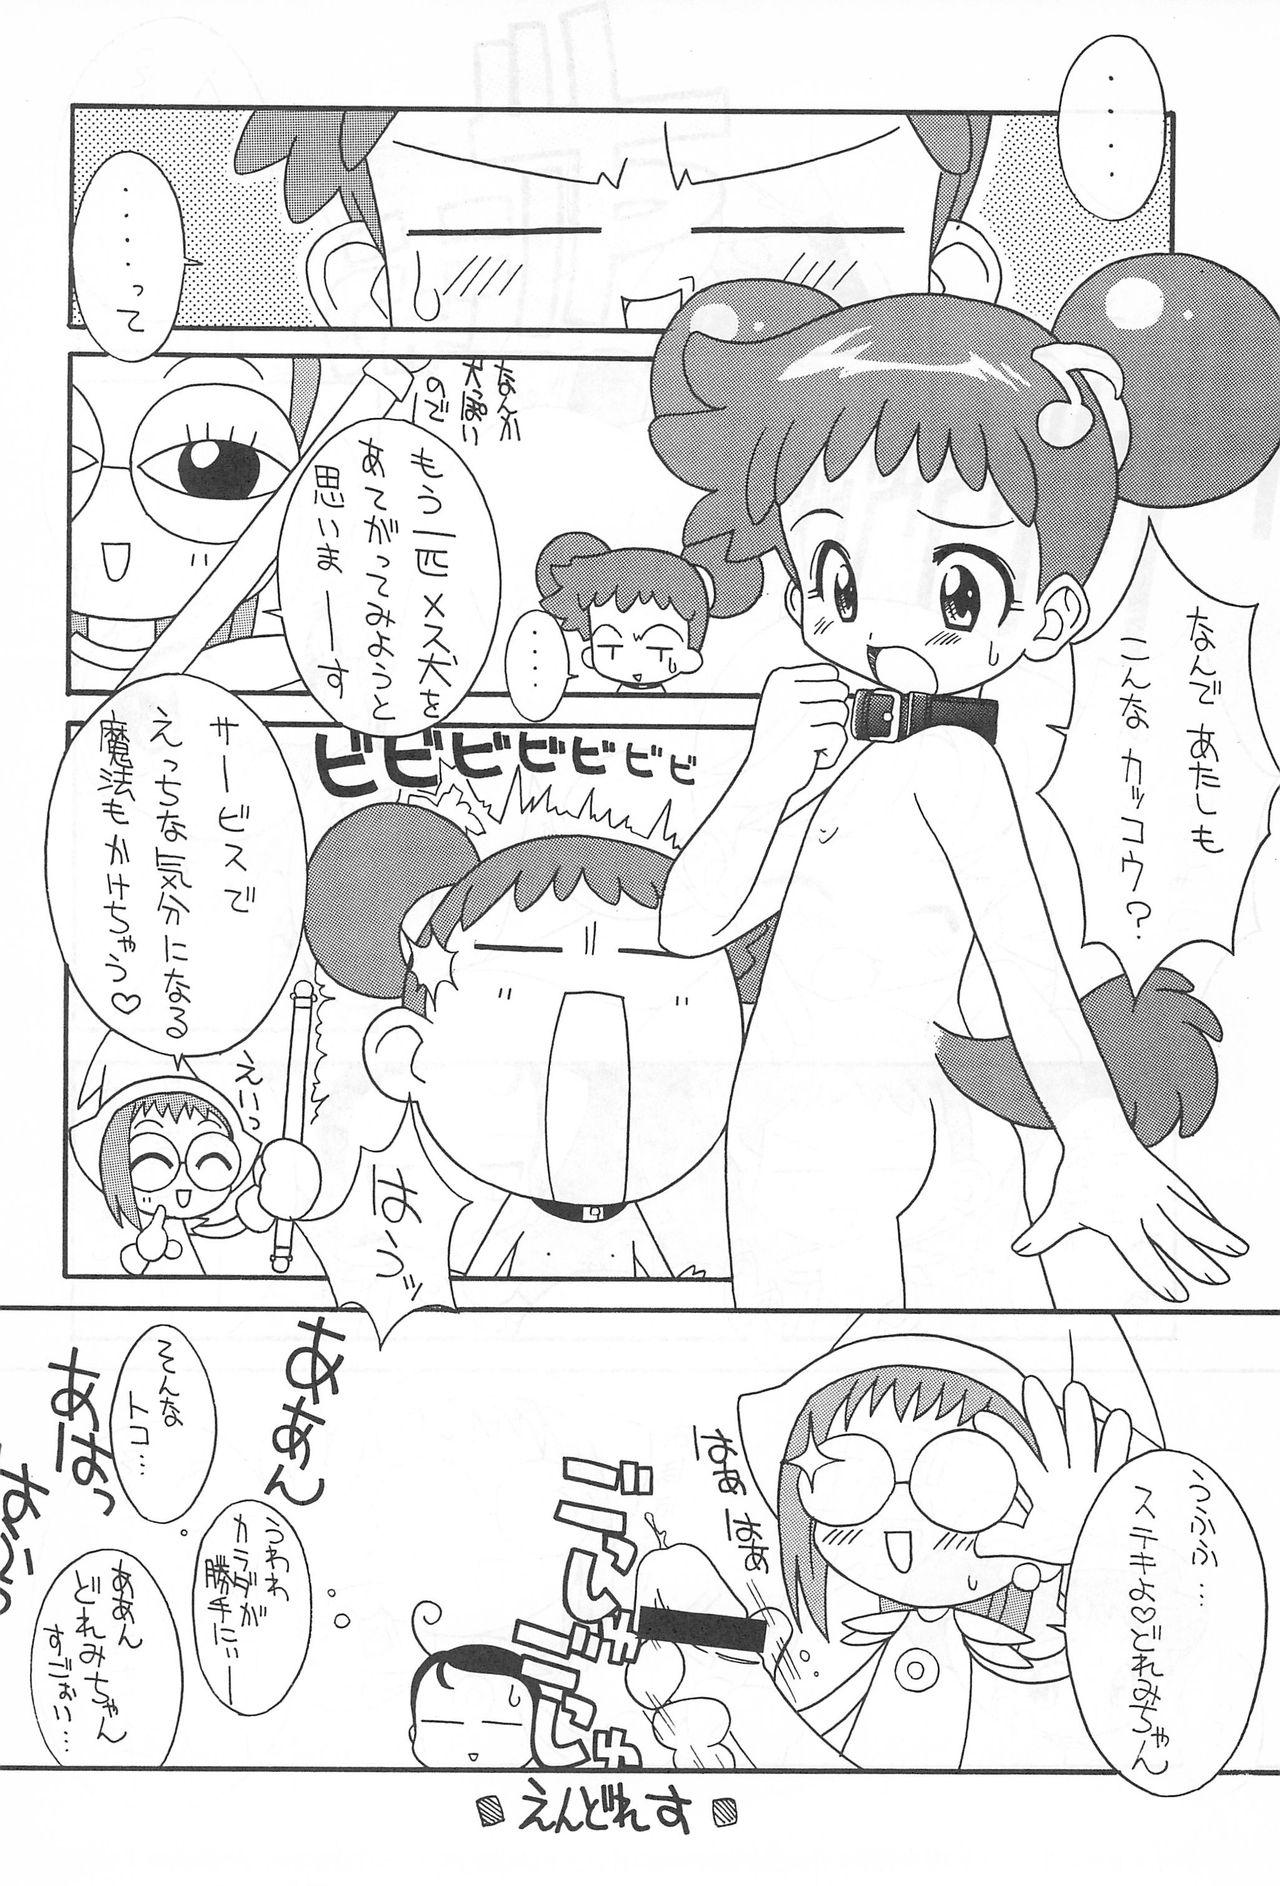 Wank Pretty Ecchi - Ojamajo doremi Wrestling - Page 10